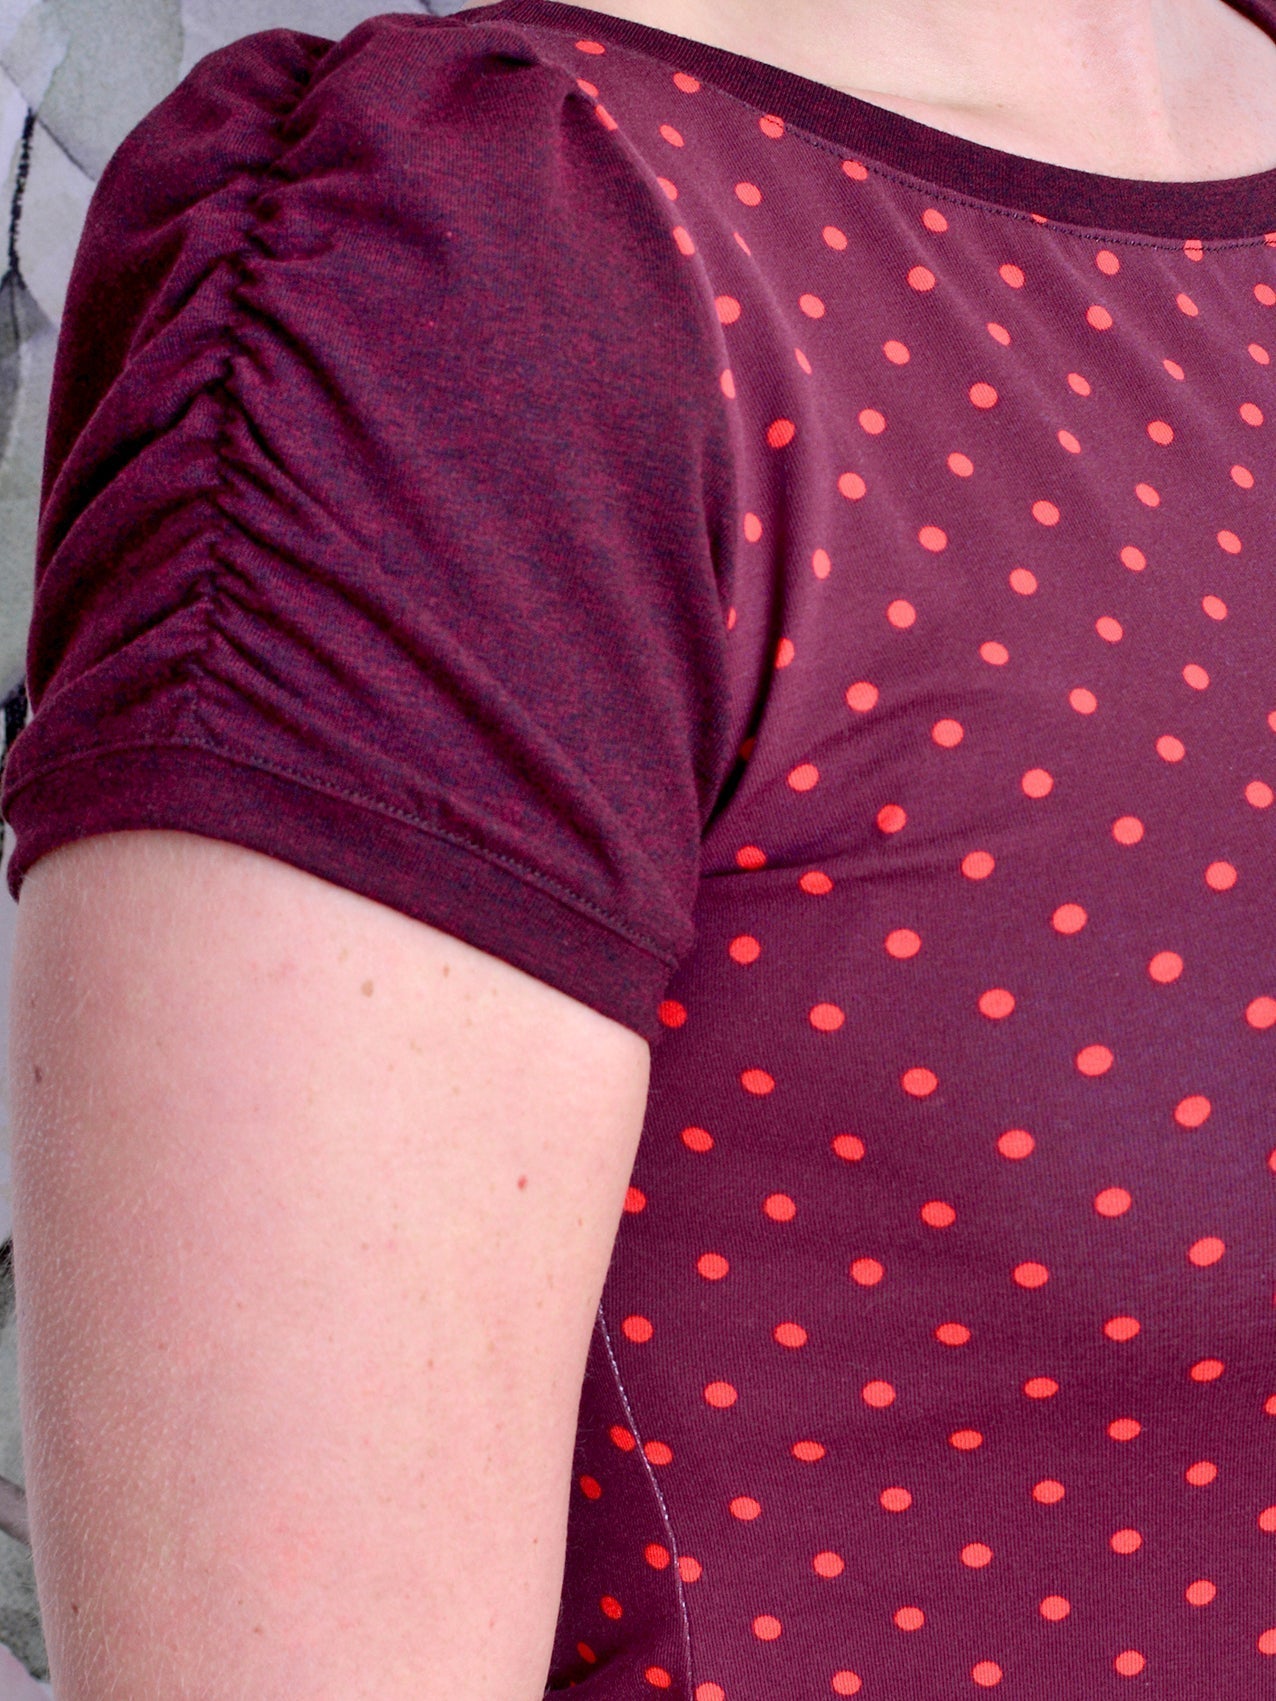 SALE > XS (34) Jersey Shirt MELINDA rot Polka Dots bordeaux Rüschen Punkte